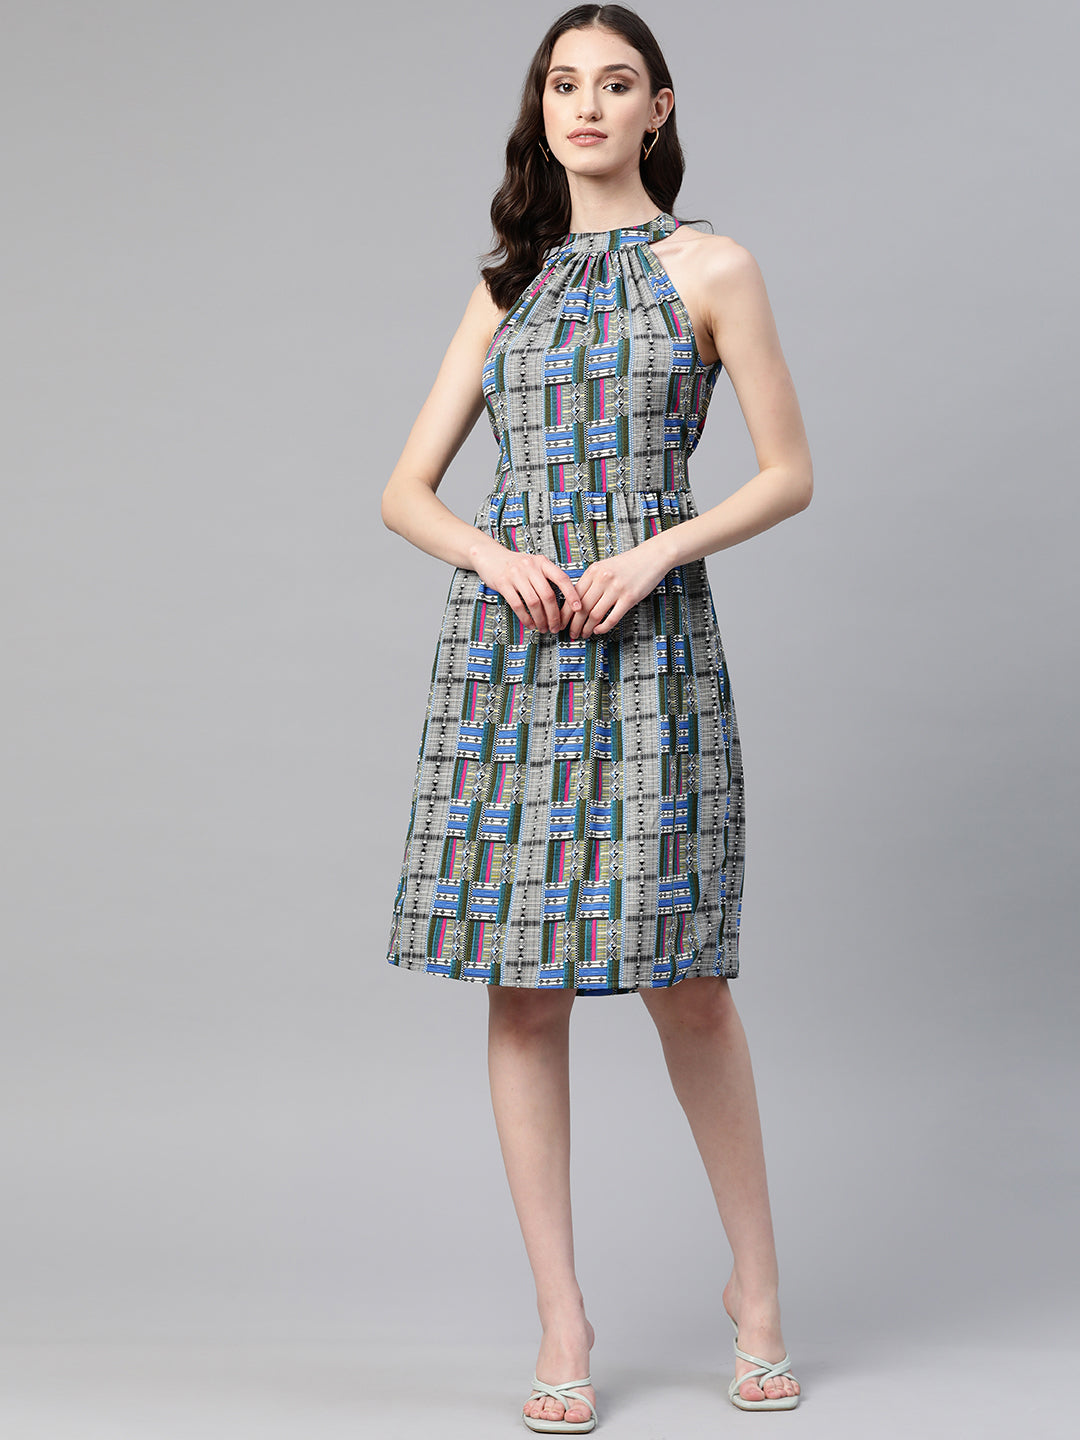 Cottinfab Geometric Print Halter Neck Crepe A-Line Dress With Tie-Ups Detail